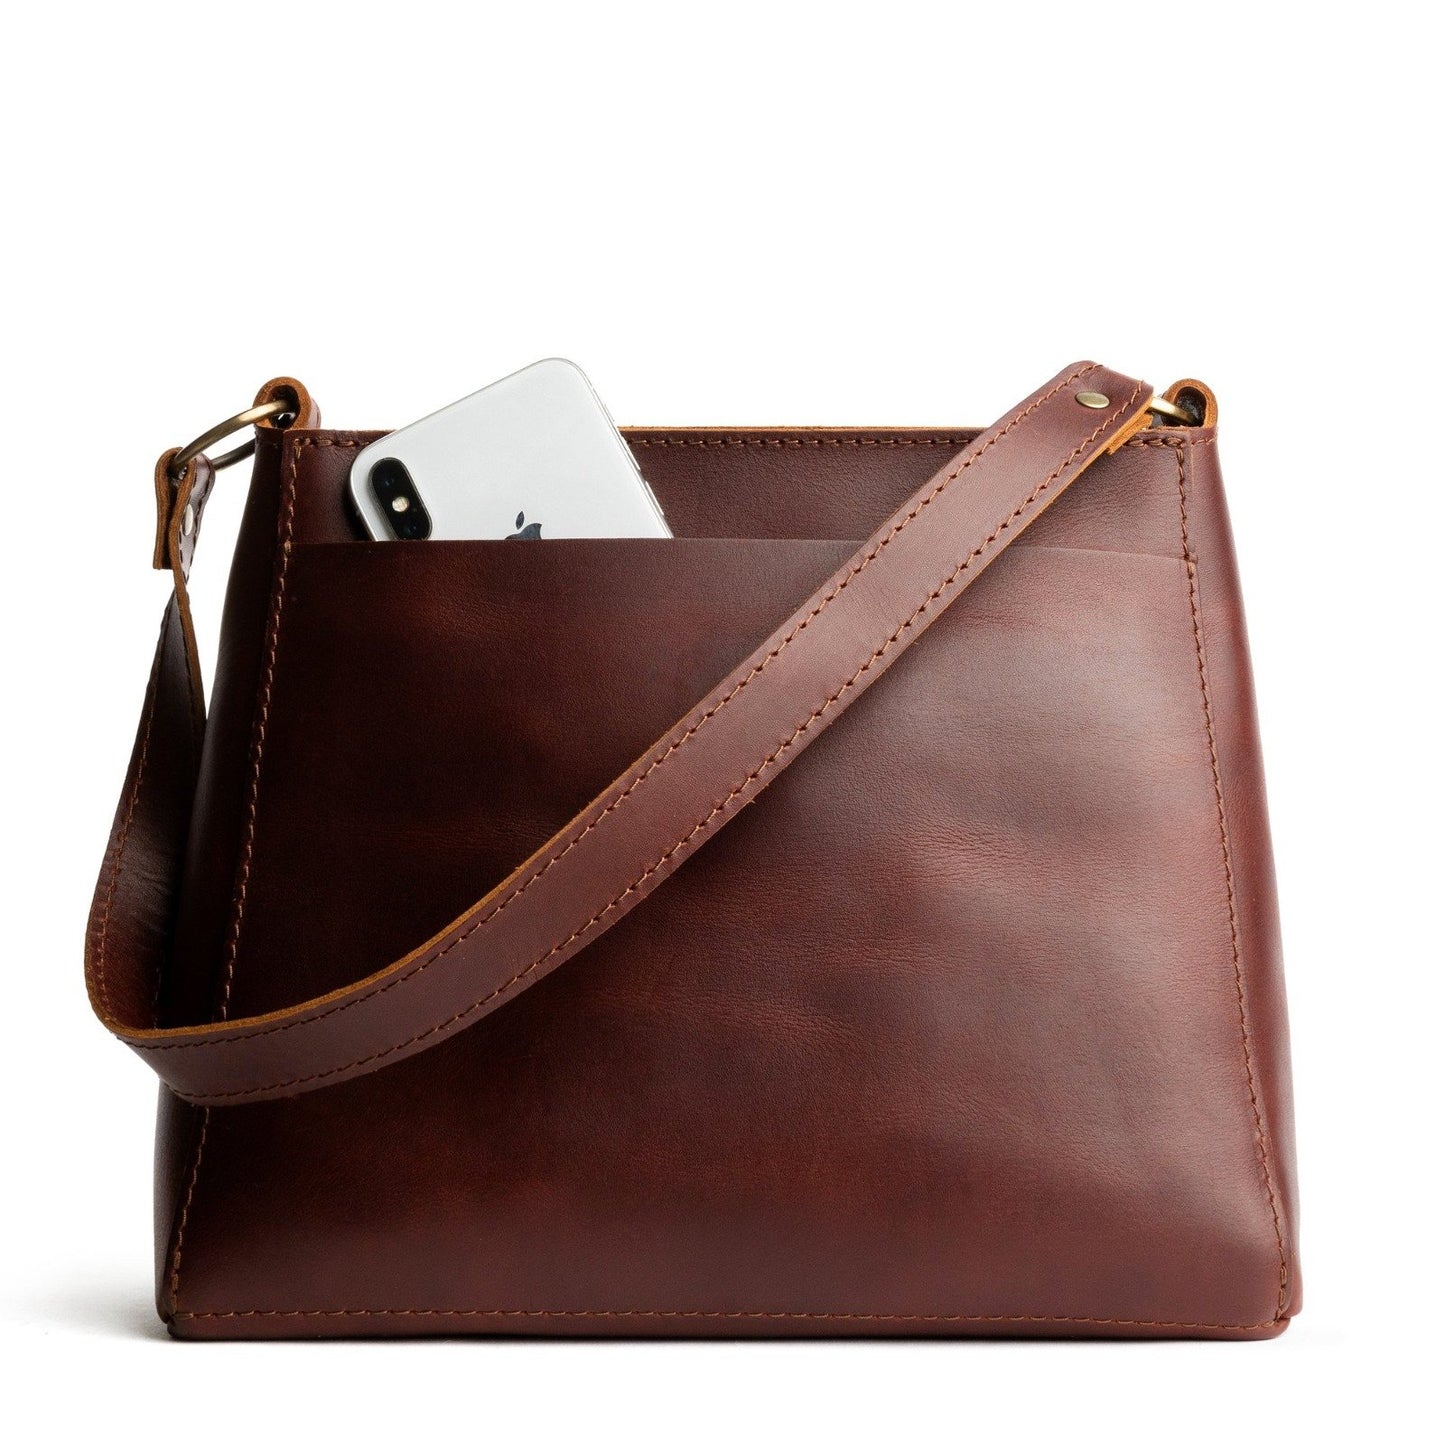 All Color: Cognac | Triangle Leather Handmade Bag